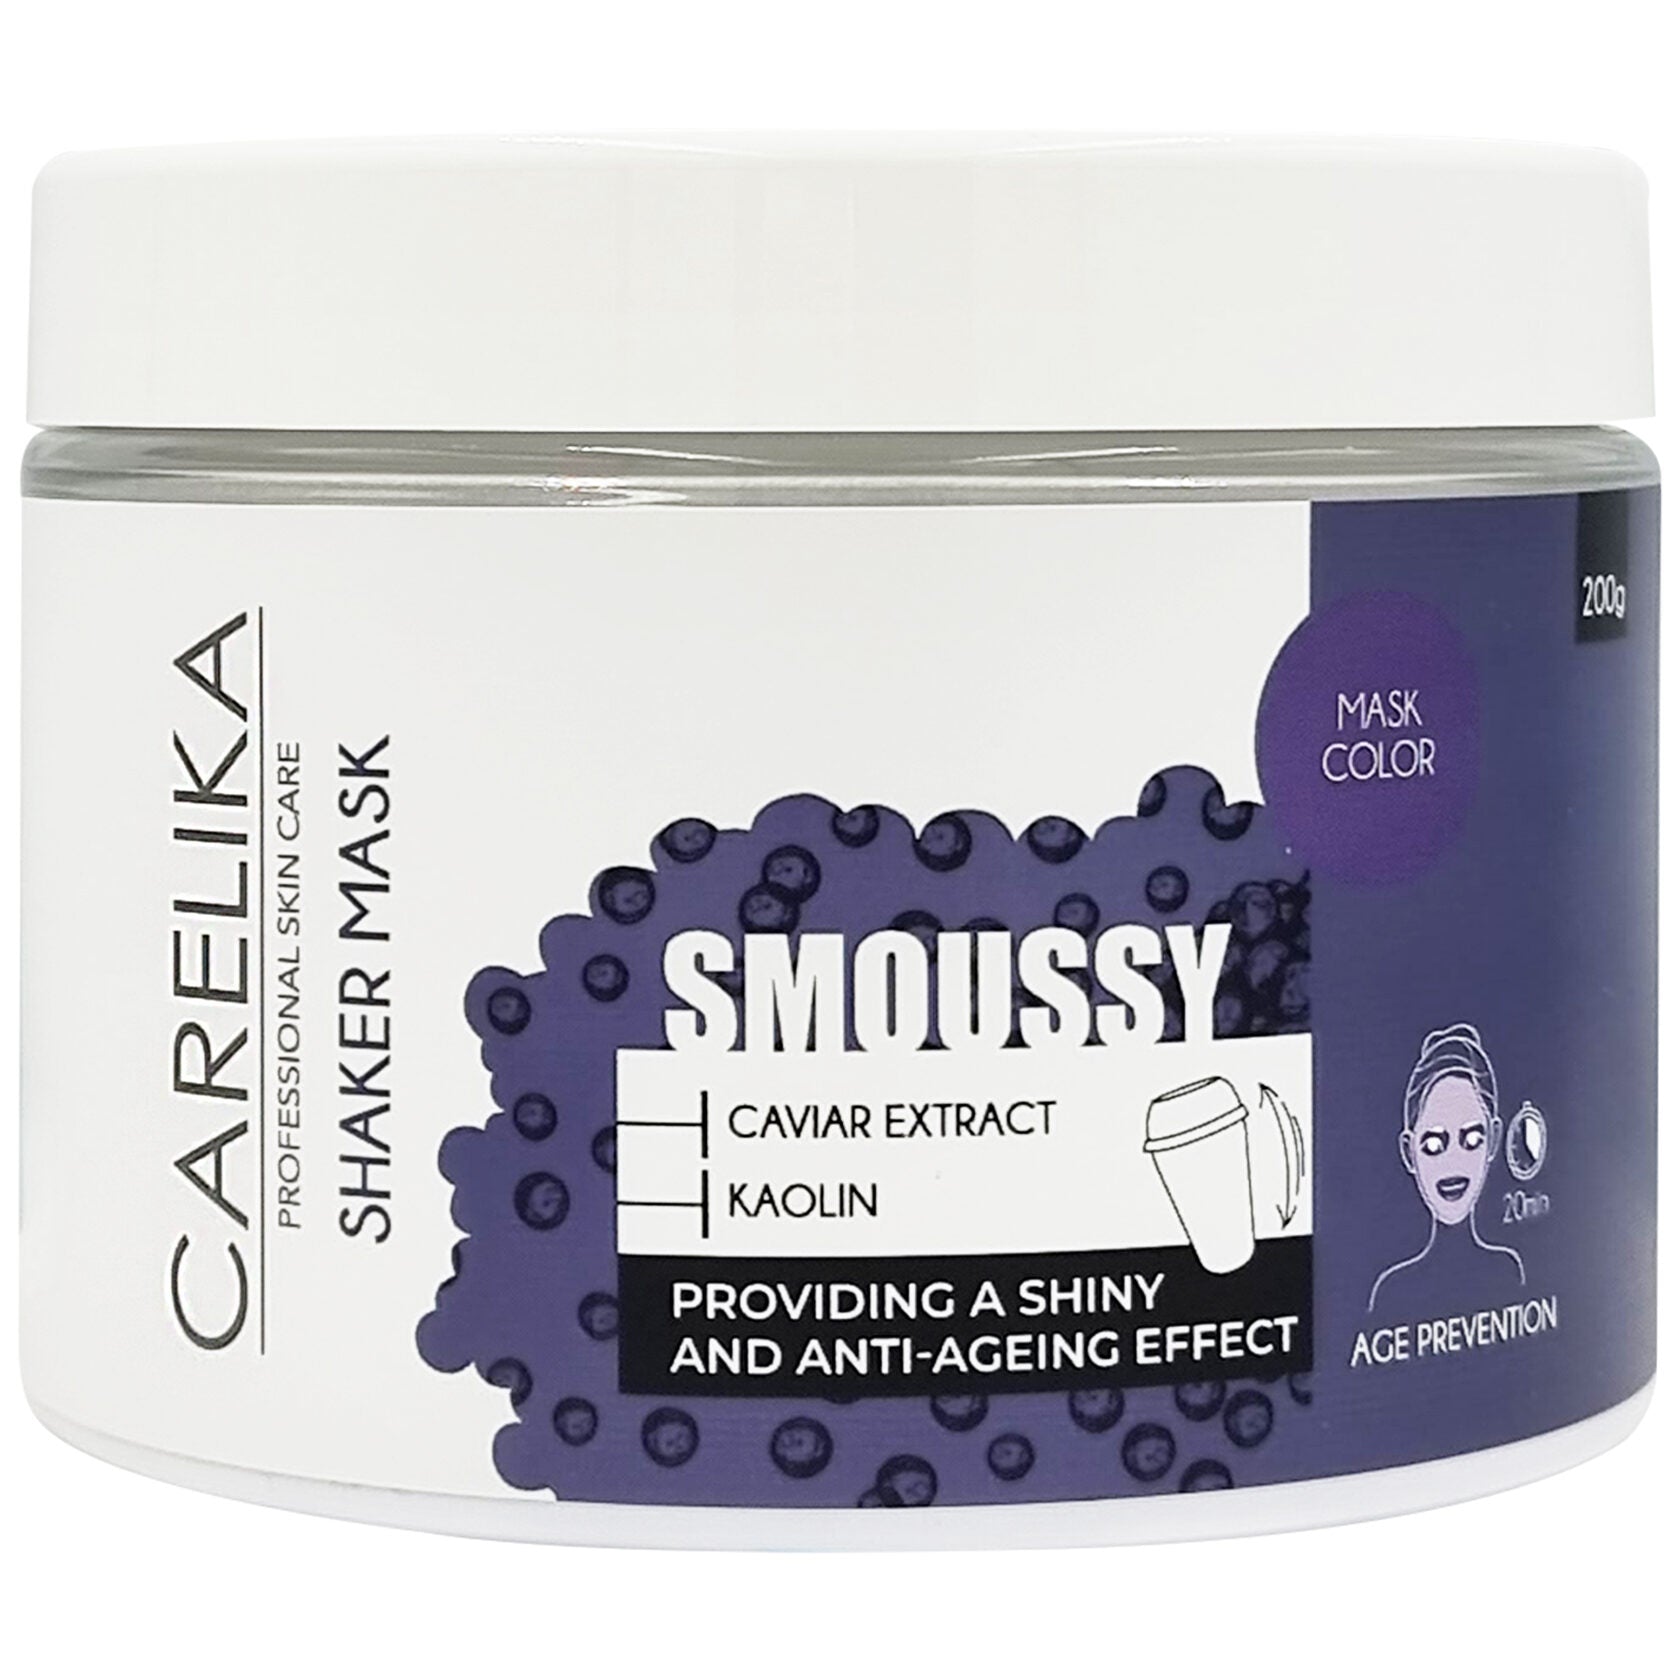 Caviar smoussy shaker mask by CARELIKA Box 200g | Lika-J